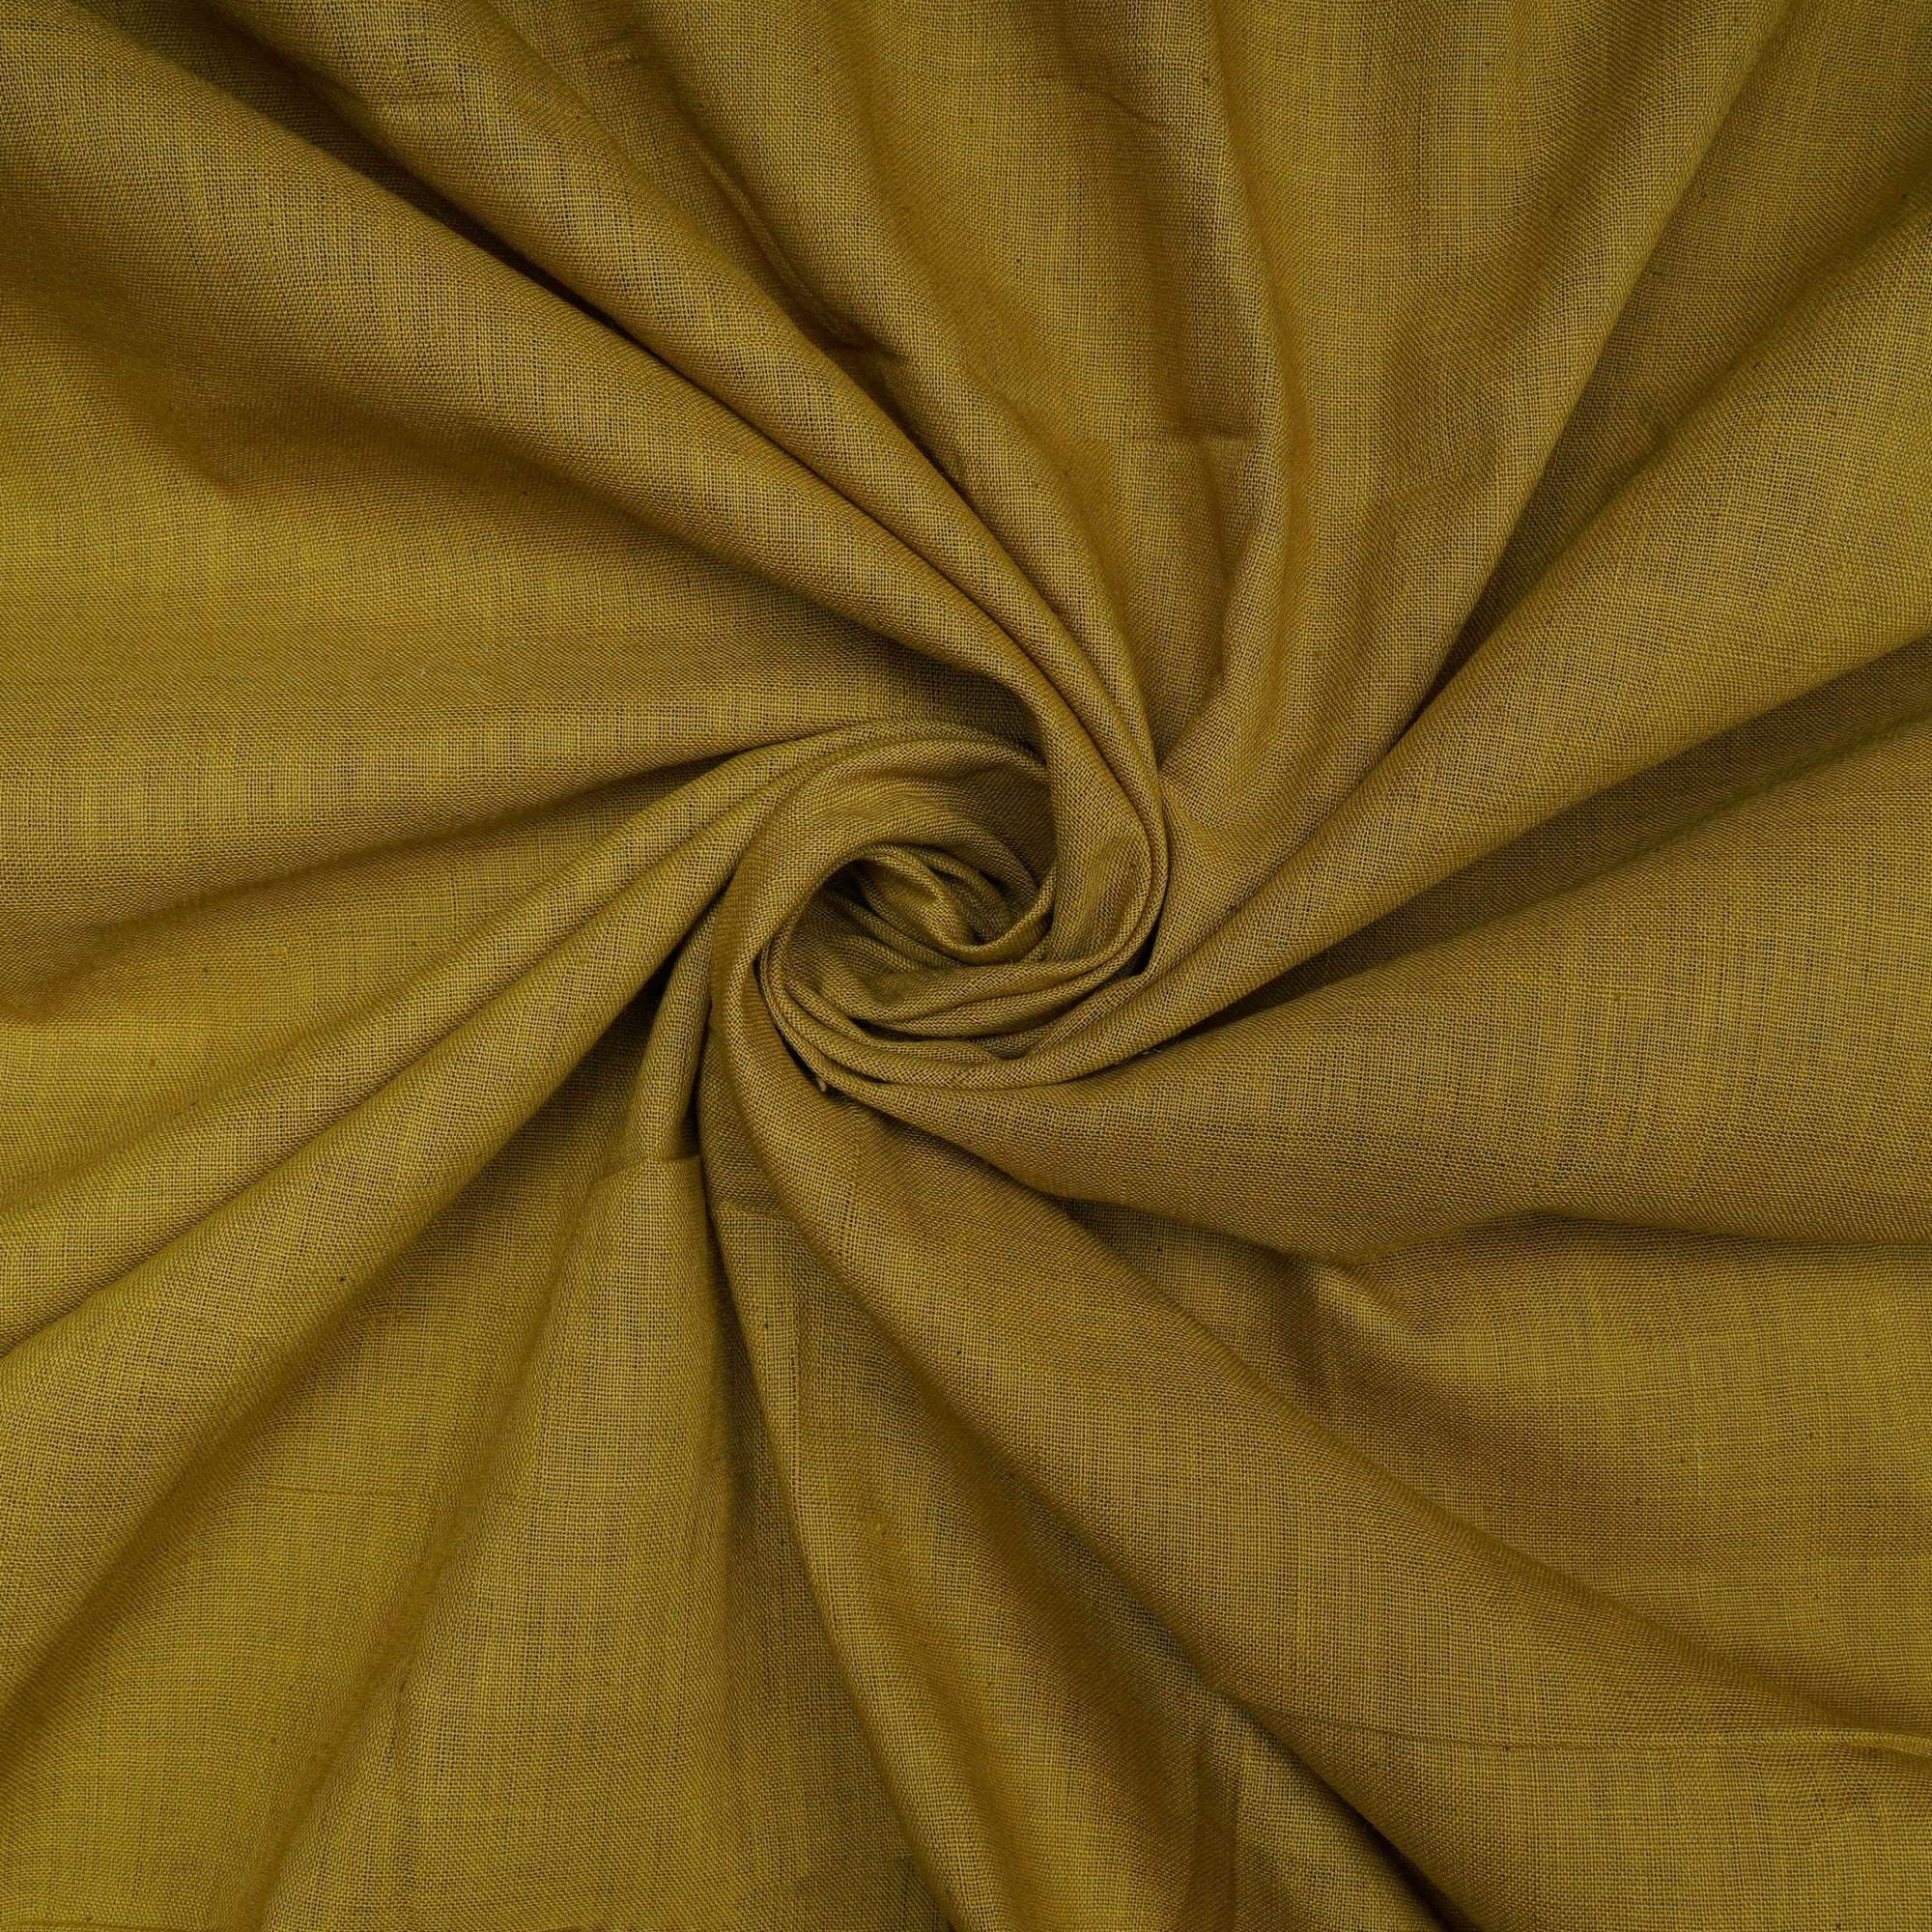 Mustard Color Handwoven Handspun Cotton Fabric